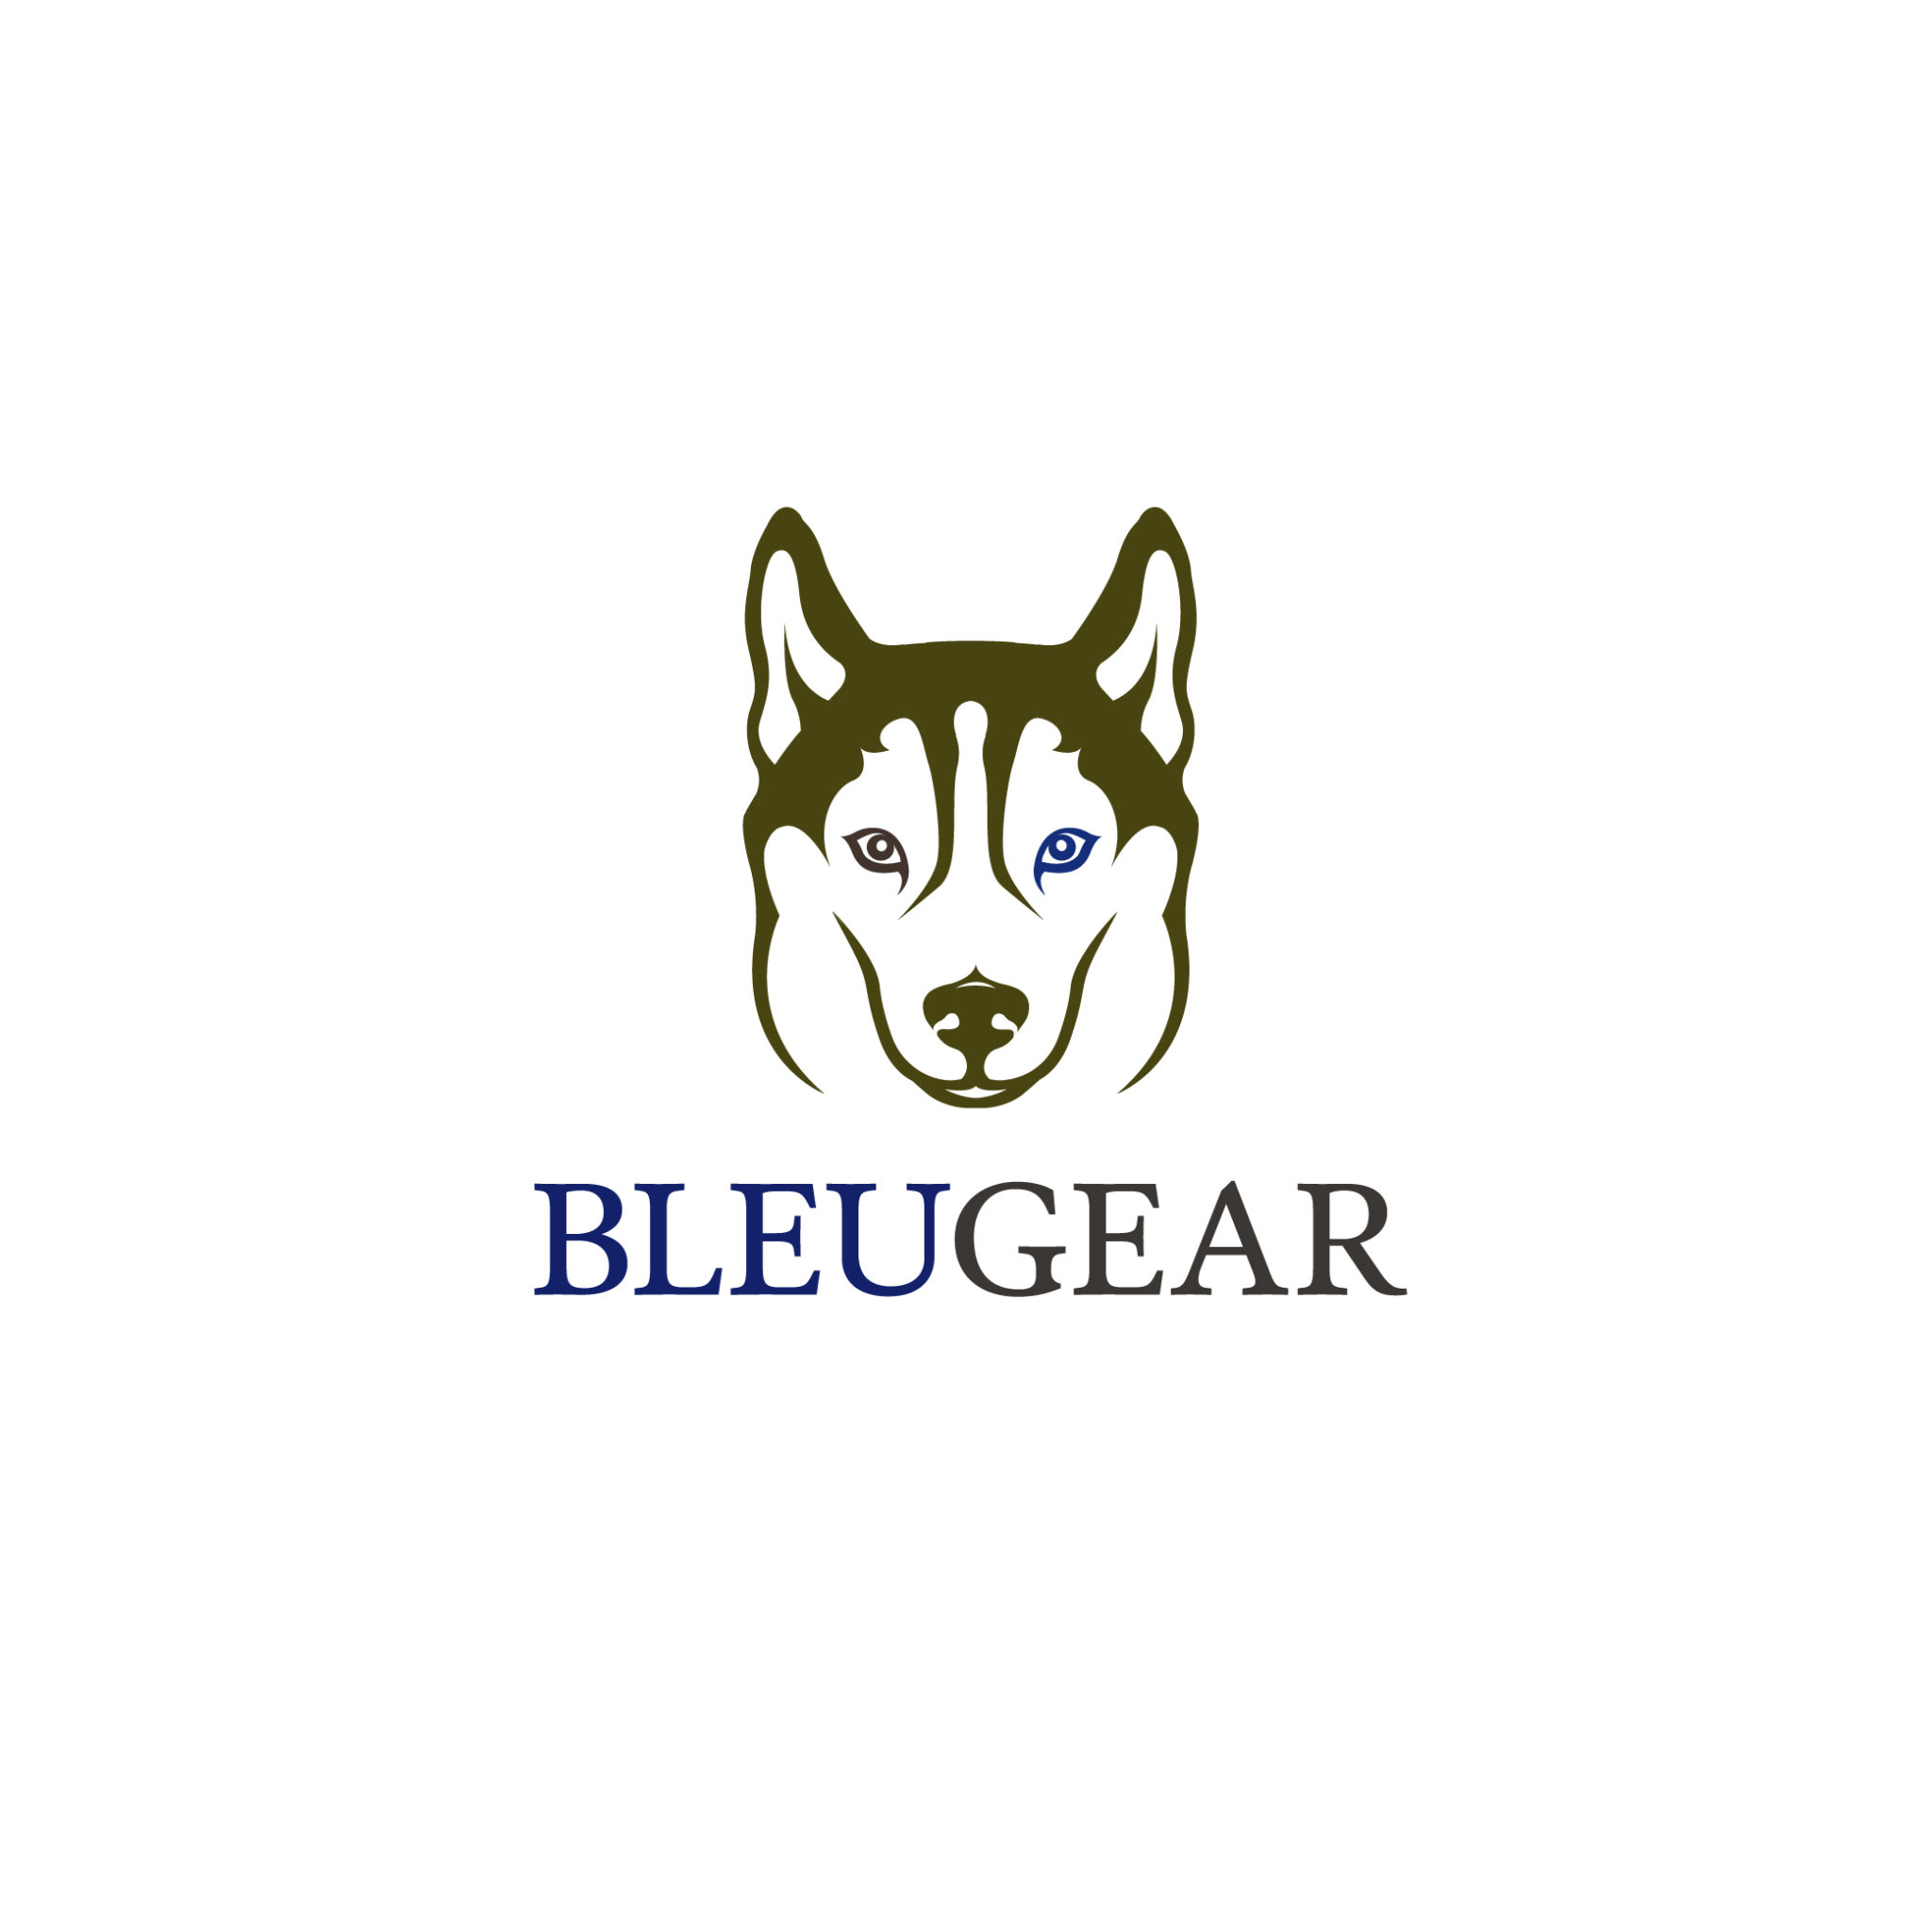 Iconic logo design for bleugear